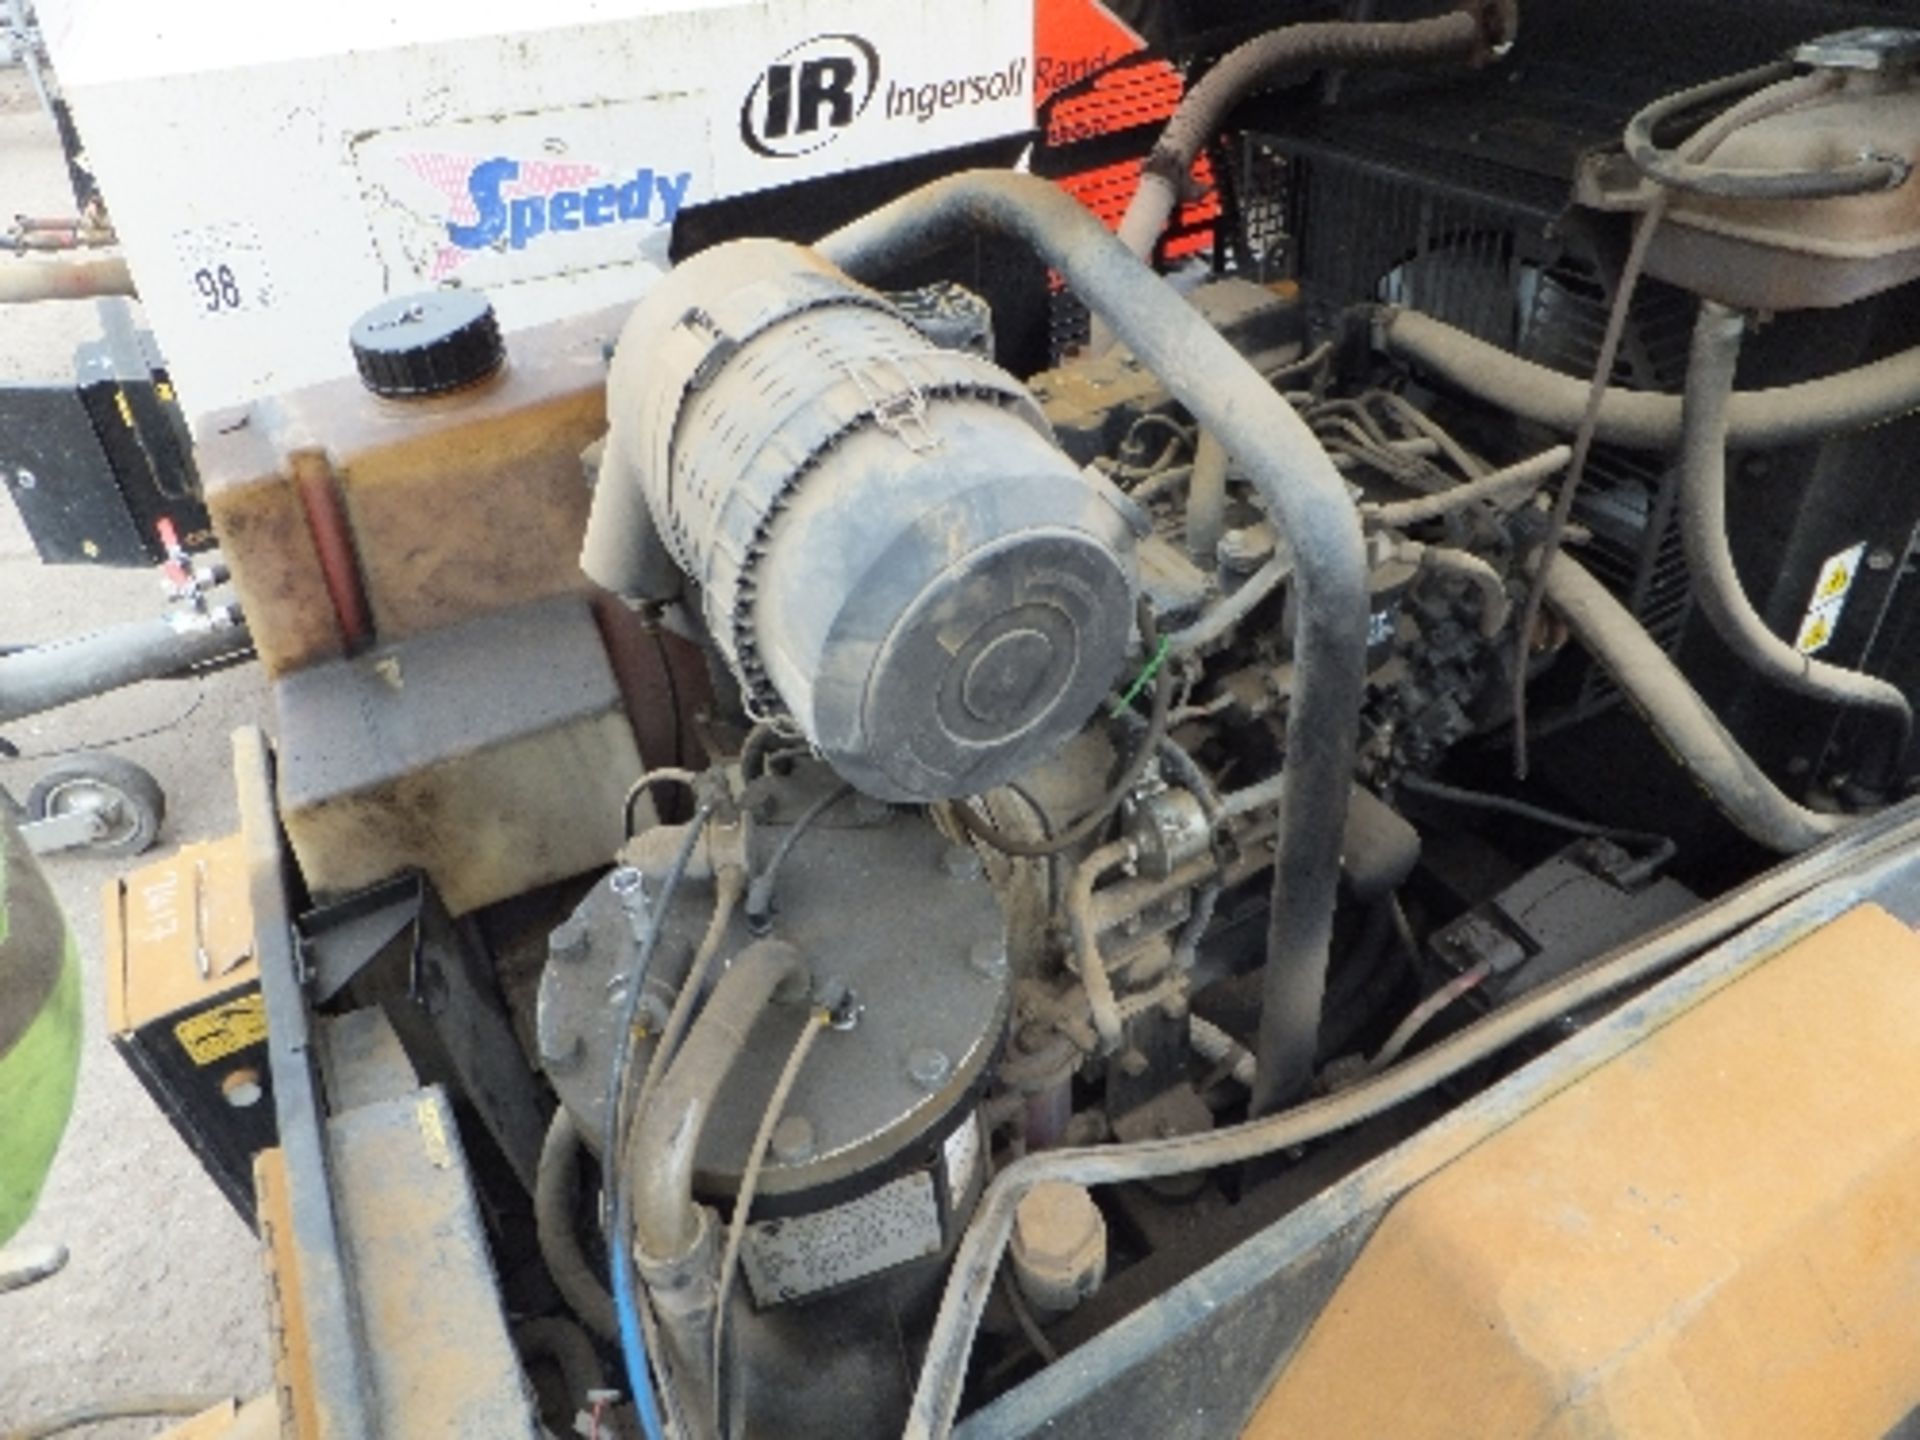 Doosan 7/31e compressor (2011) 957 hrs  - no ignition switch - Image 2 of 2